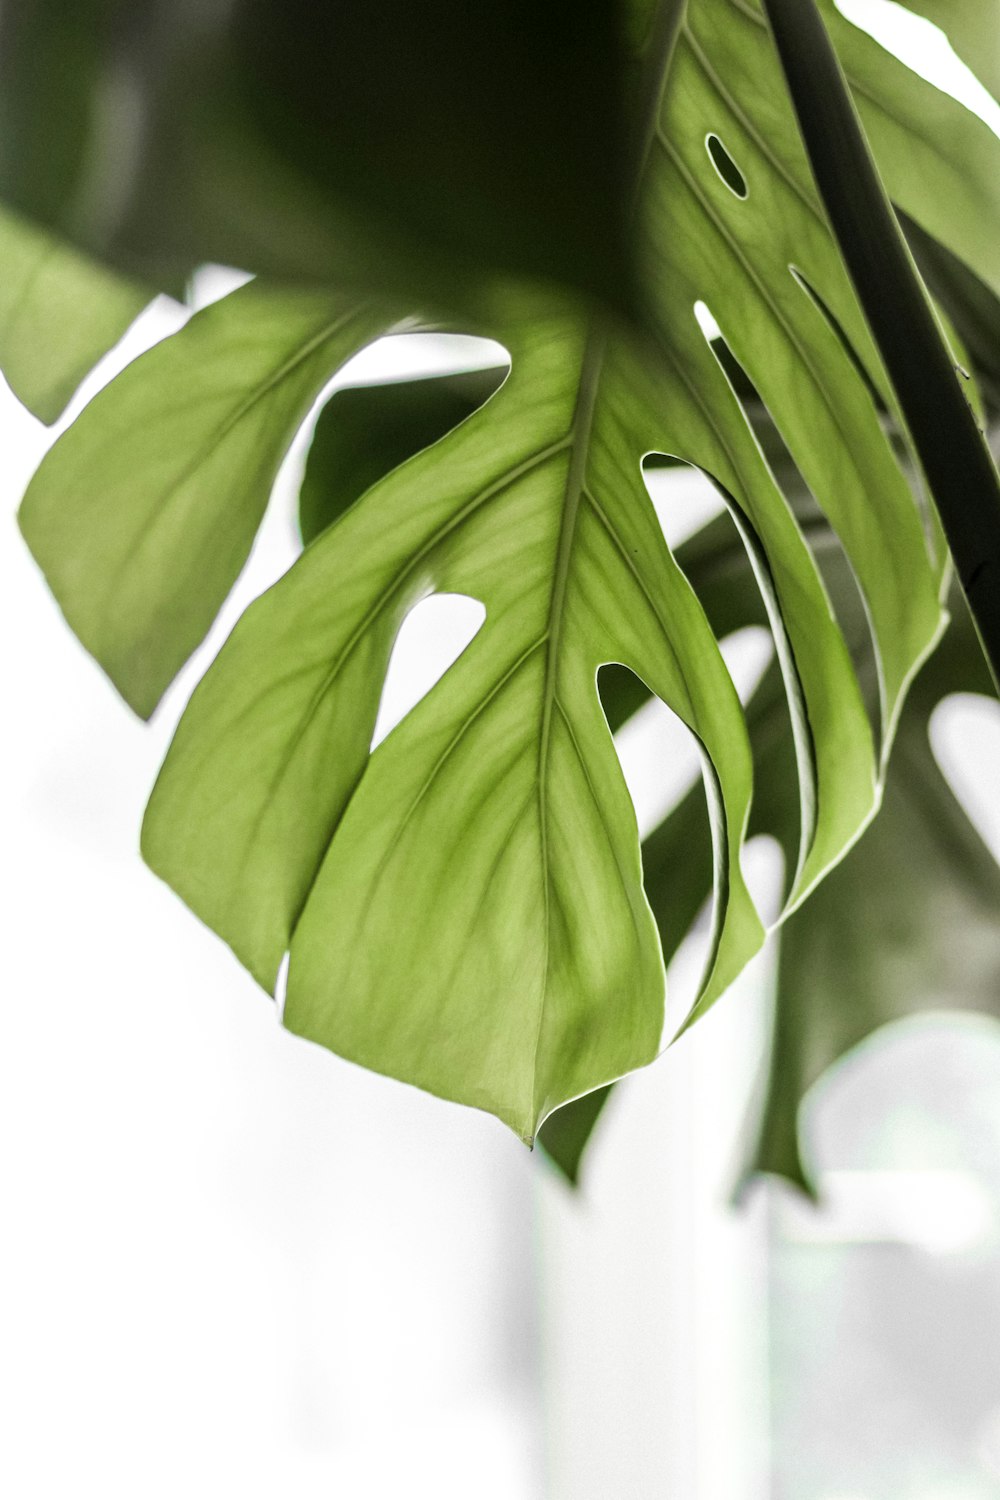 Fotografia macro di una pianta a foglia verde